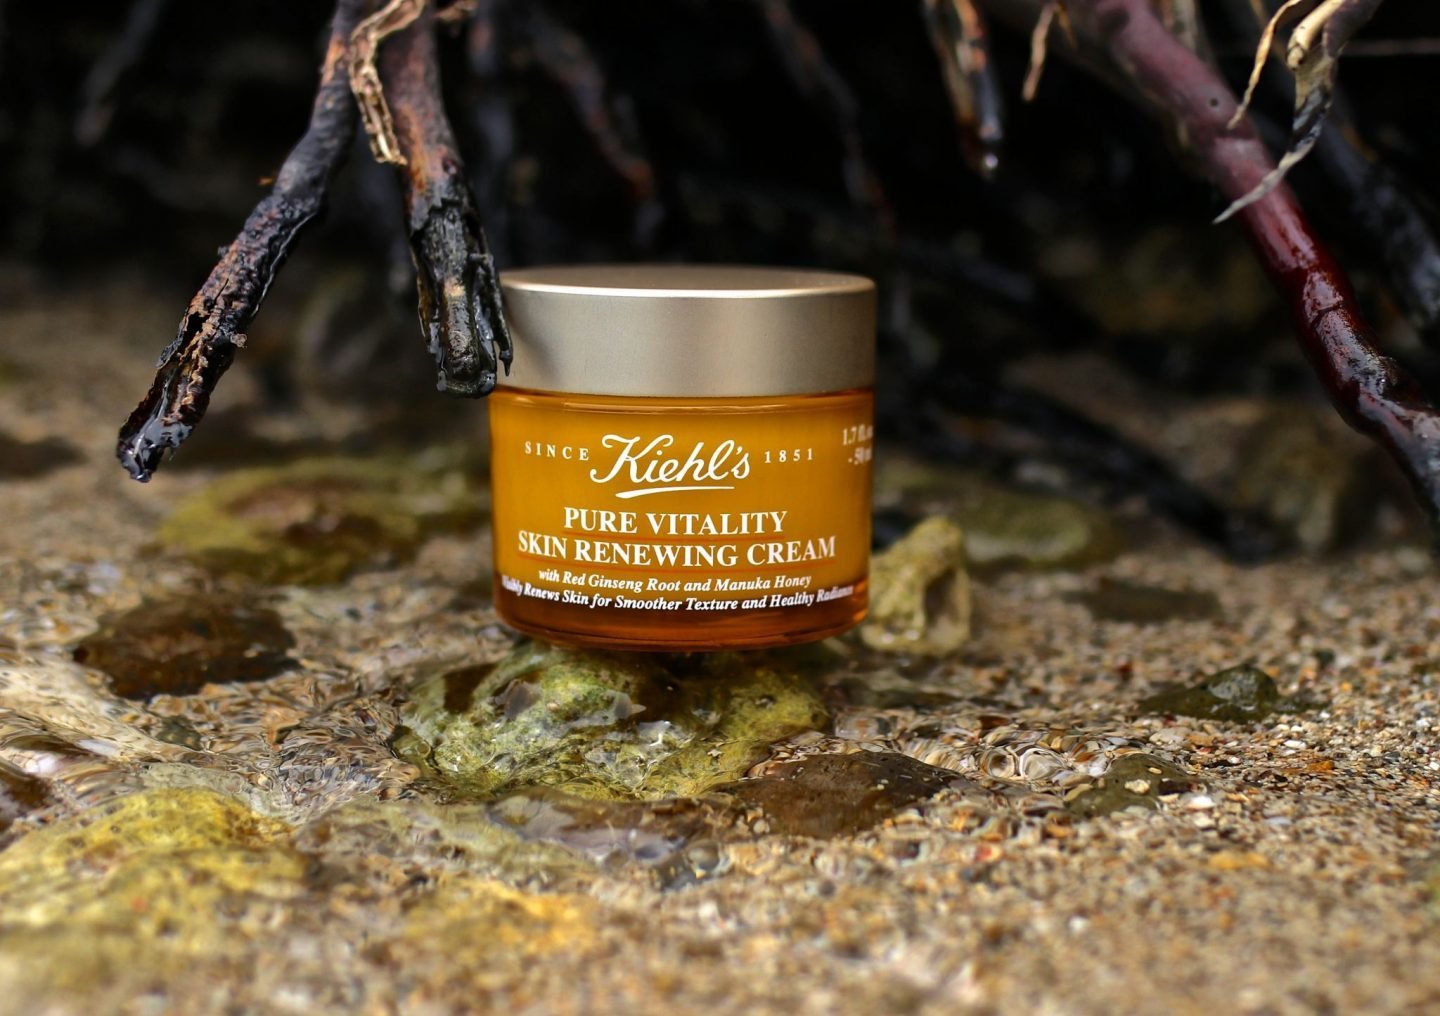 Kiehl's Pure Vitality Skin Renewing Cream